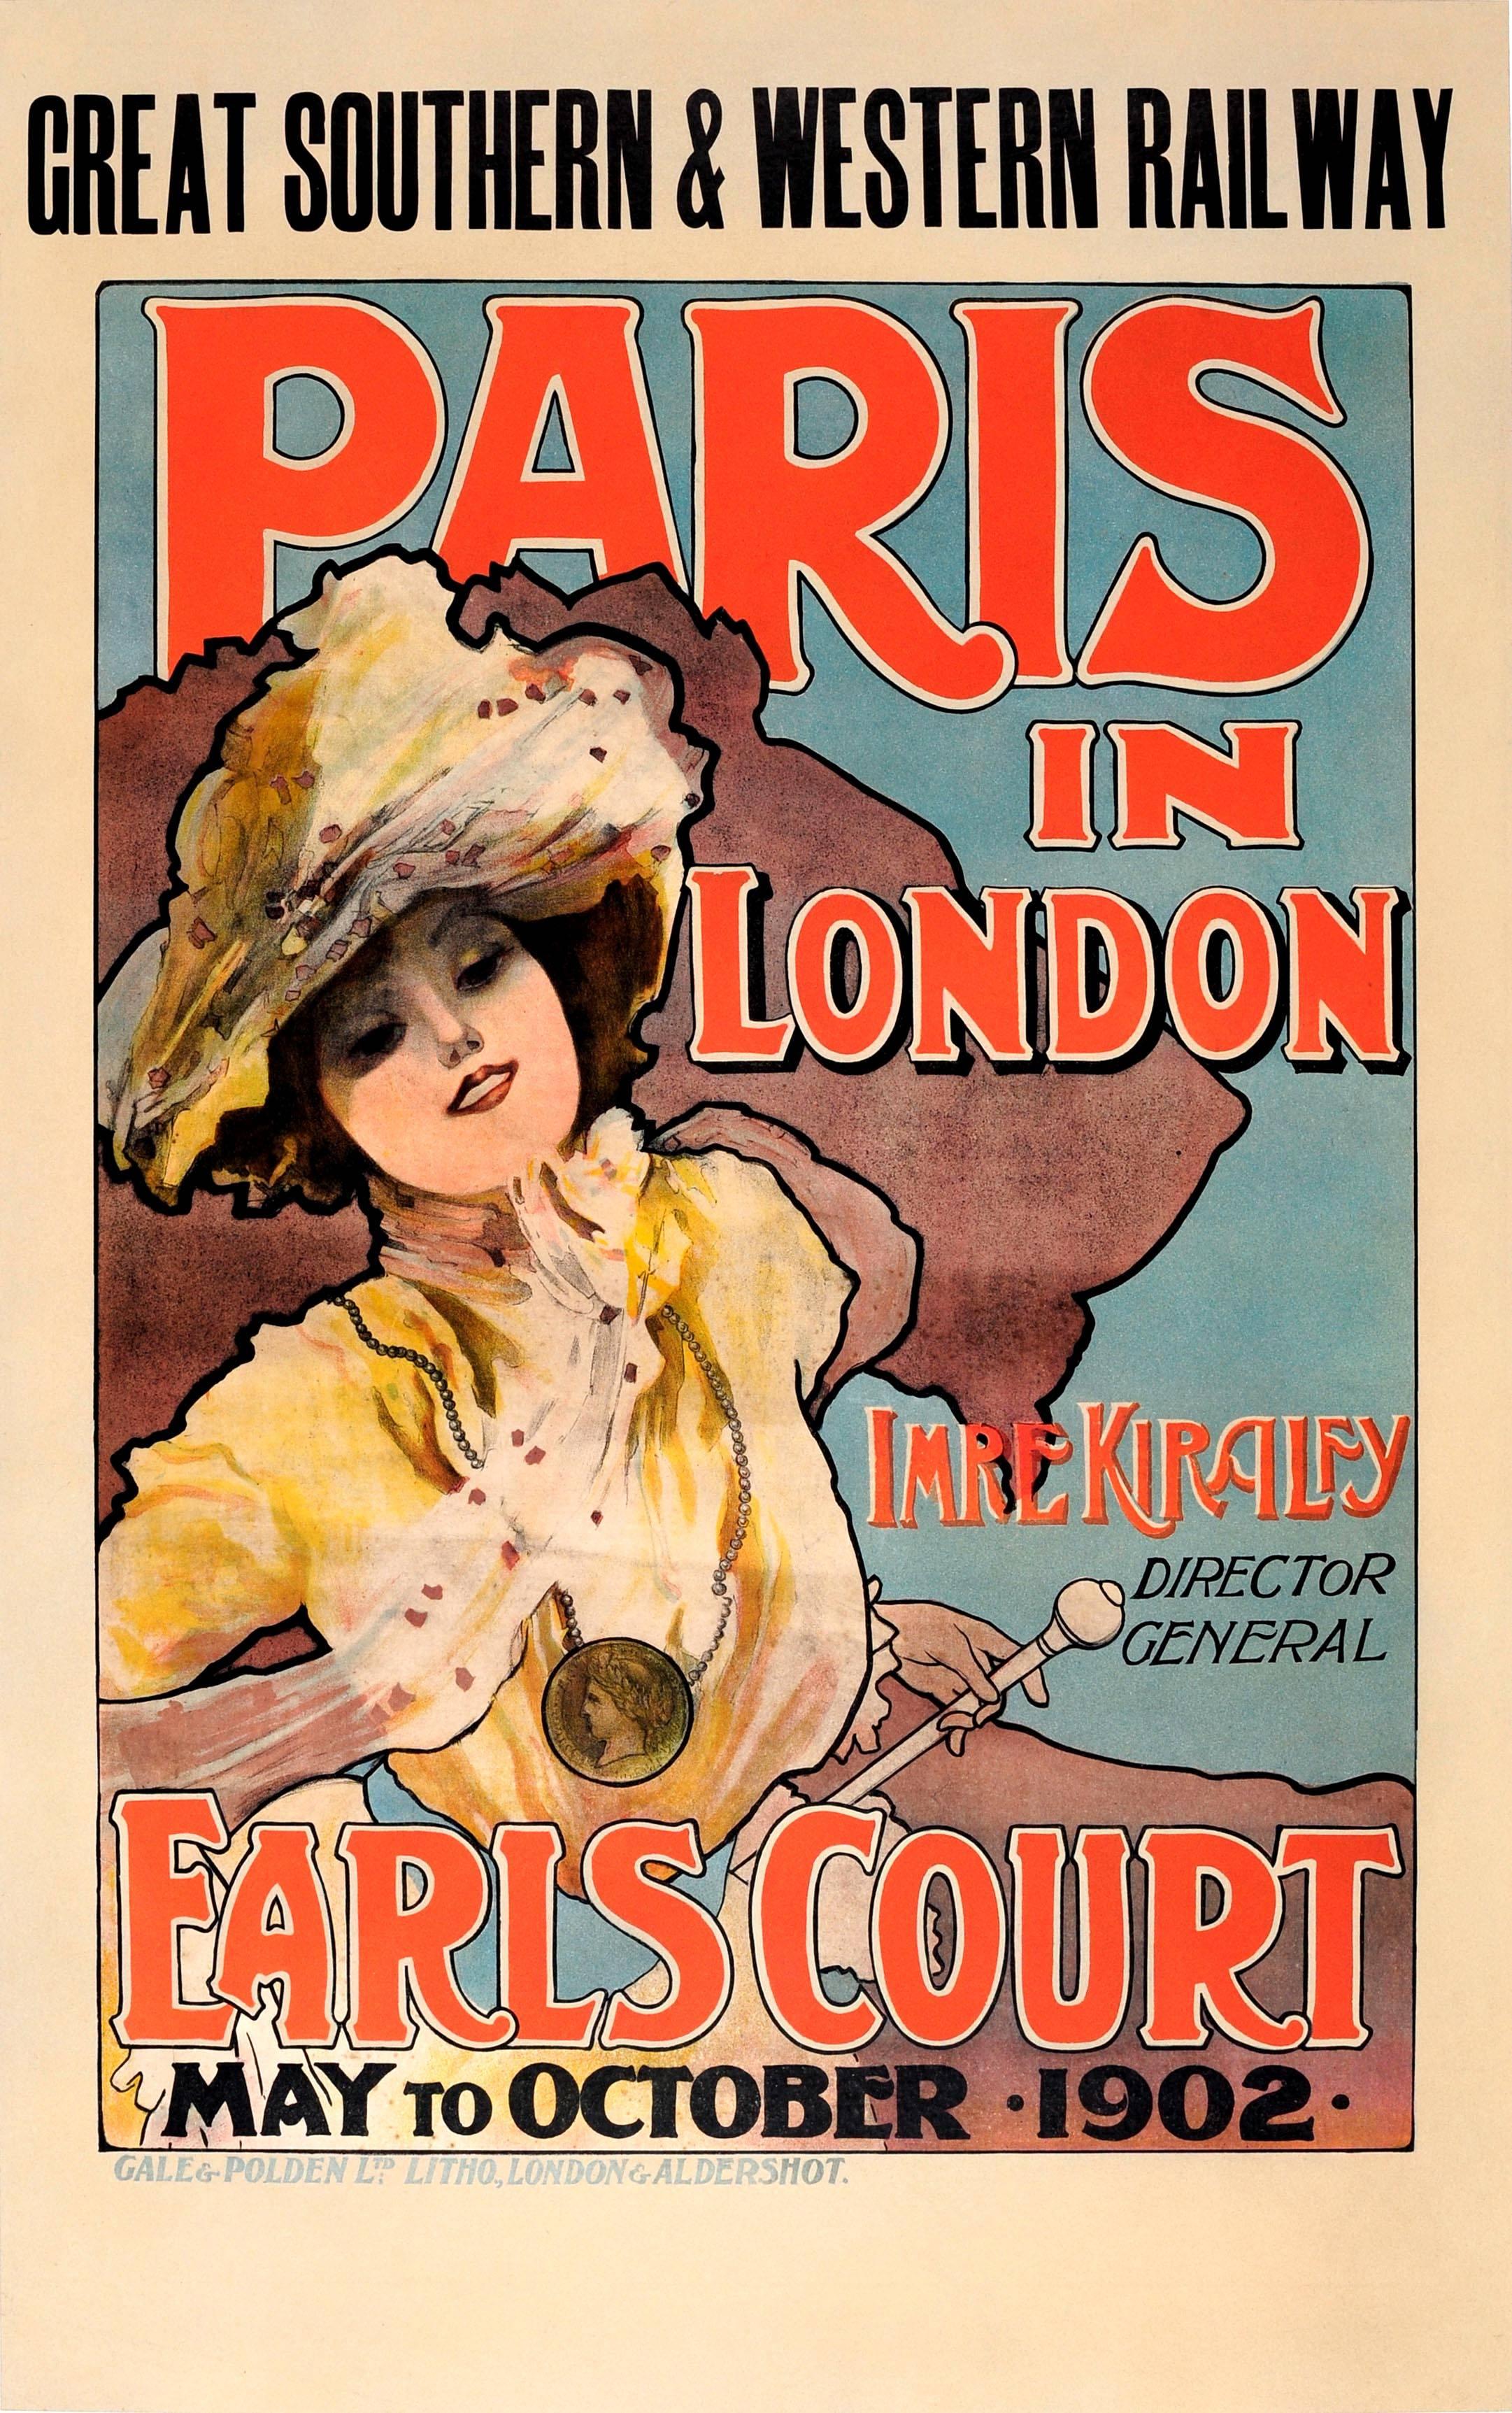 Unknown Print - Original Art Nouveau Poster - Paris In London 1902 Imre Kiralfy - GS&W Railway